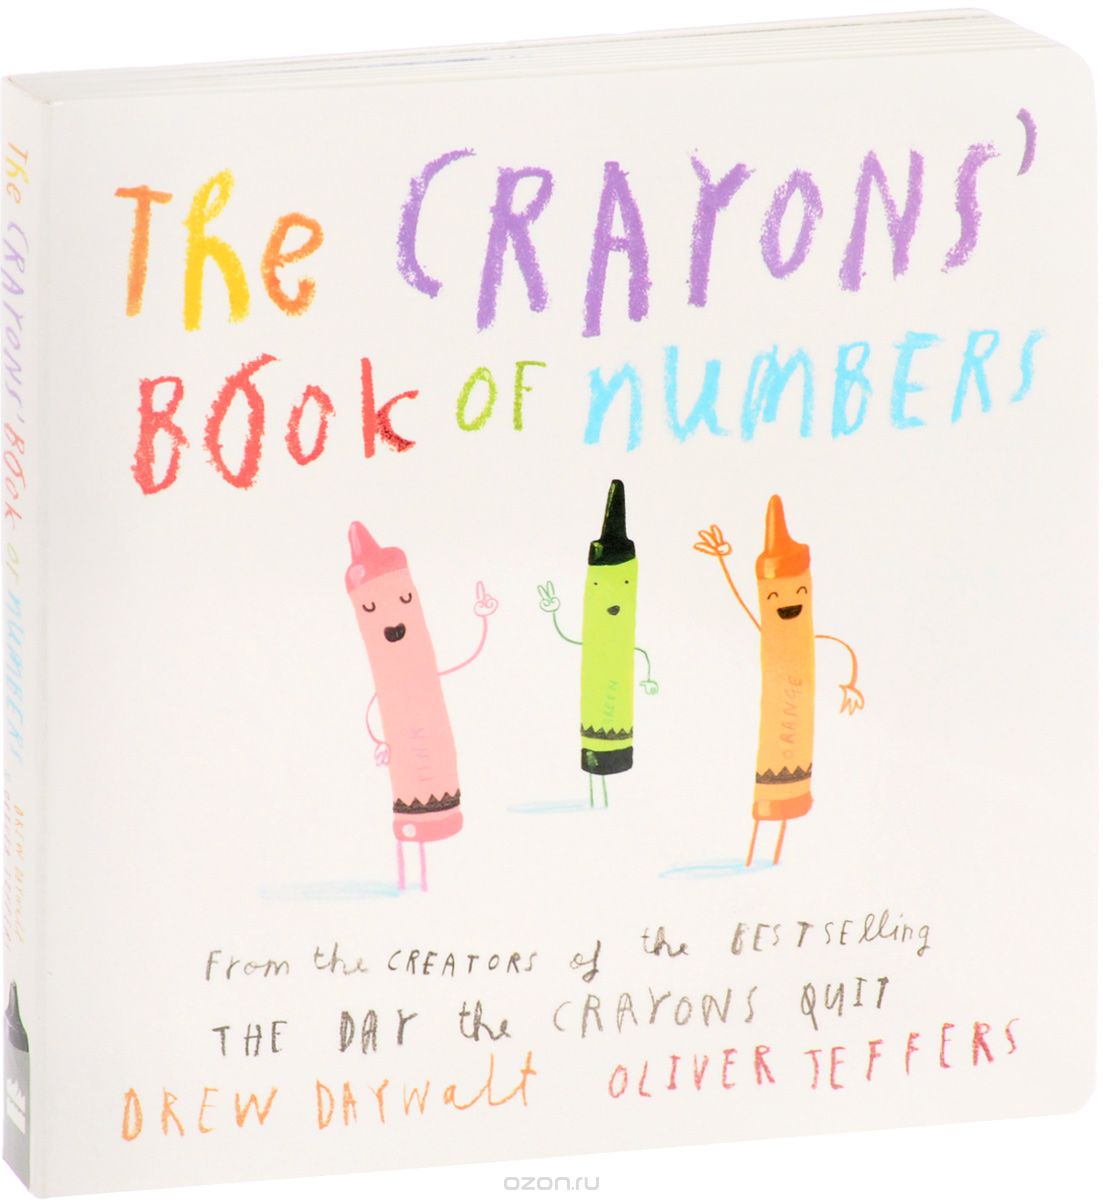 Скачать книгу "The Crayons' Book of Numbers"